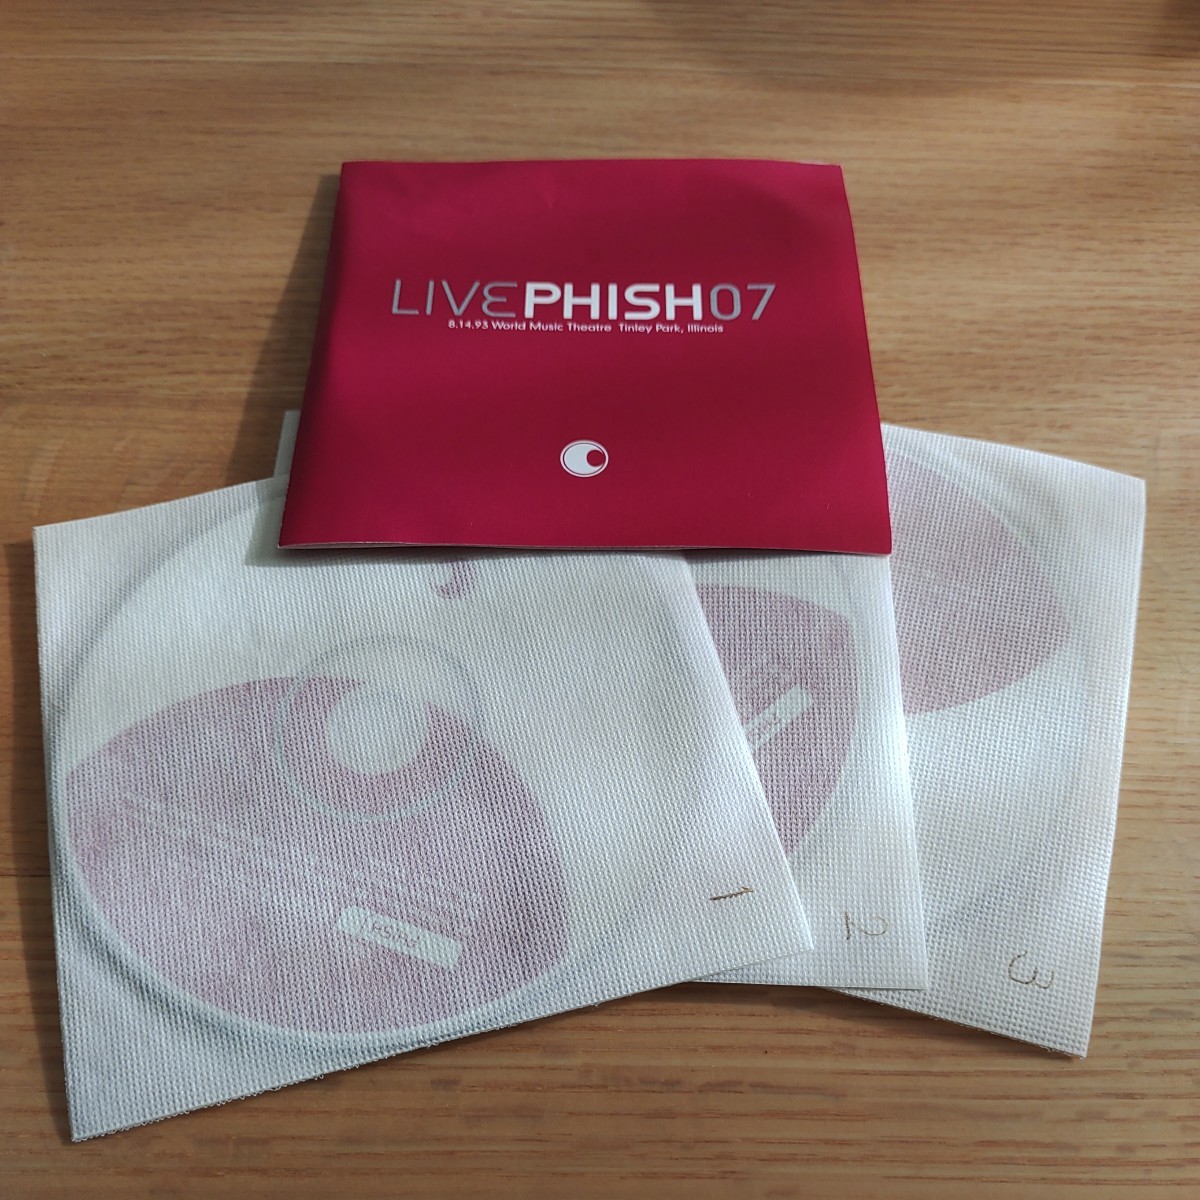 PHISH / LIVE PHISH 07 (8.14.93 World Music Theatre Tinley Park, Illinois) (輸入盤３CD・外箱付)　フィッシュ _画像3